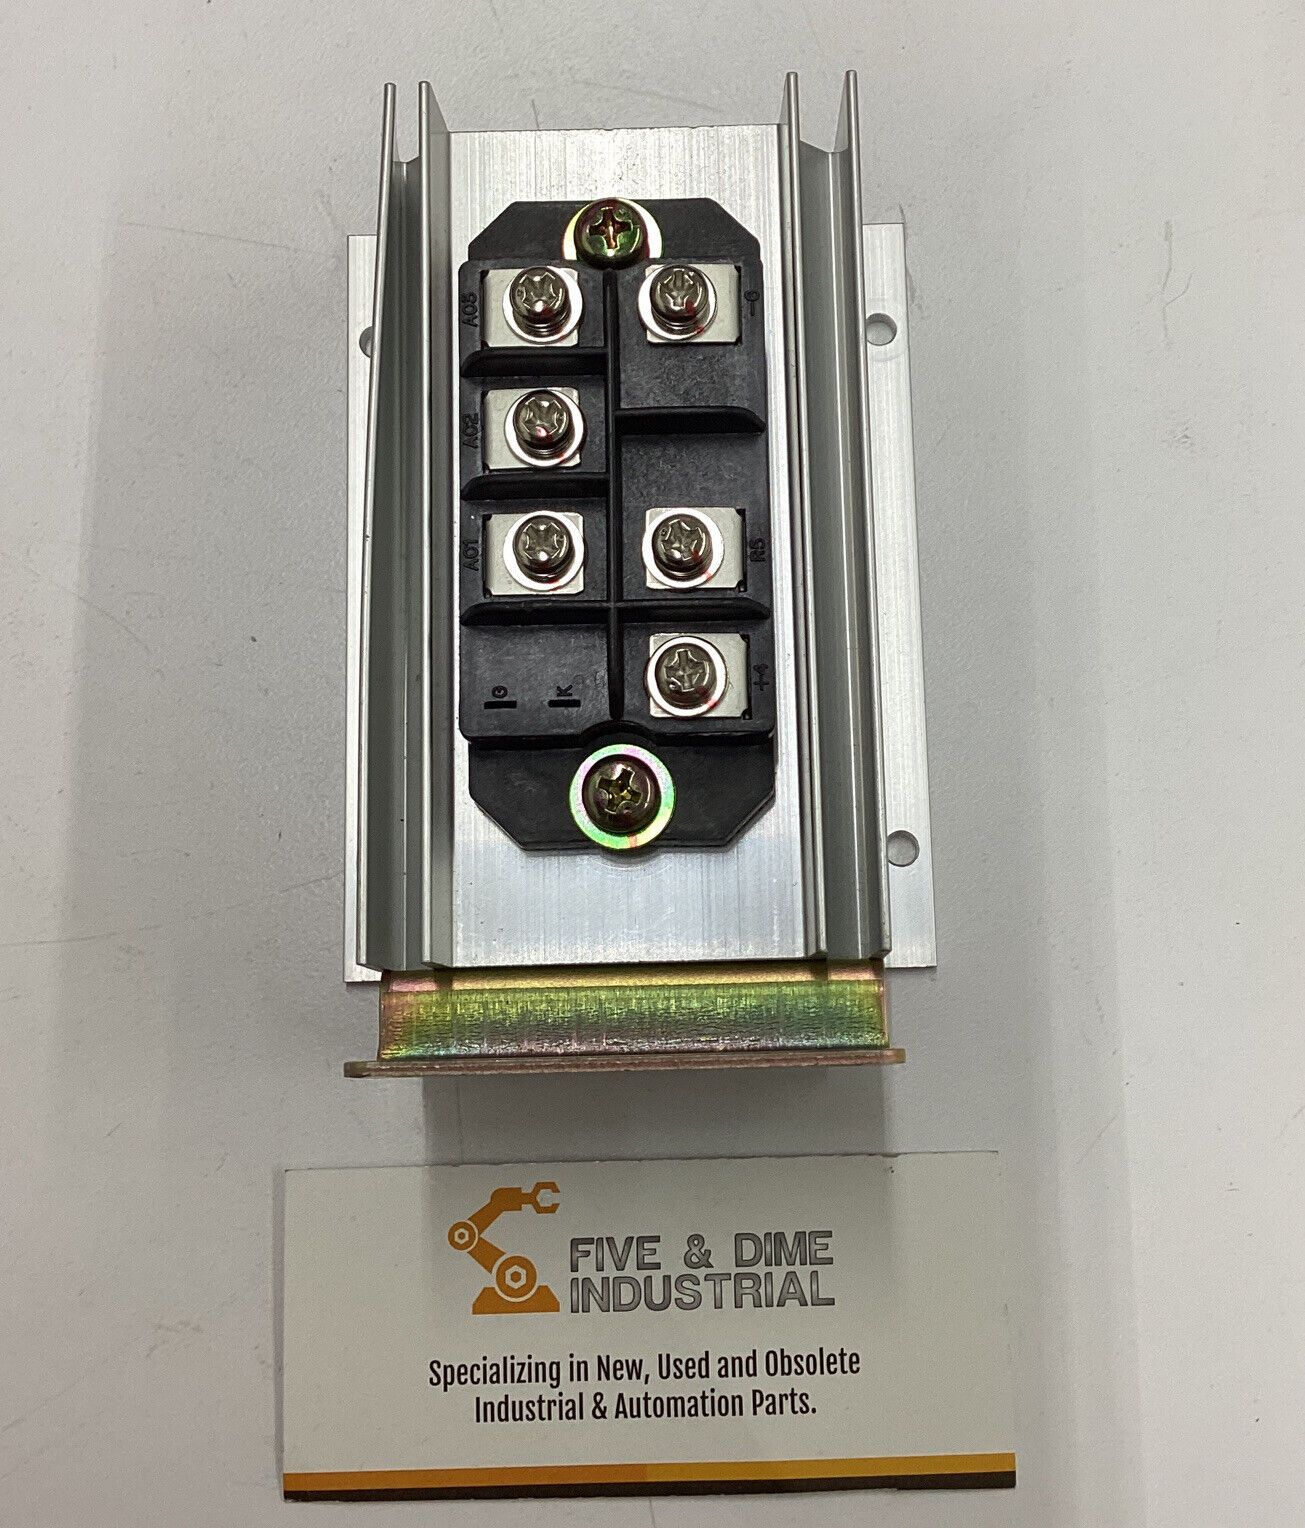 Nihon IE 800V 36A 3P Bridge Circuit Diode Module with Heat Sink P25T80 (RE127)